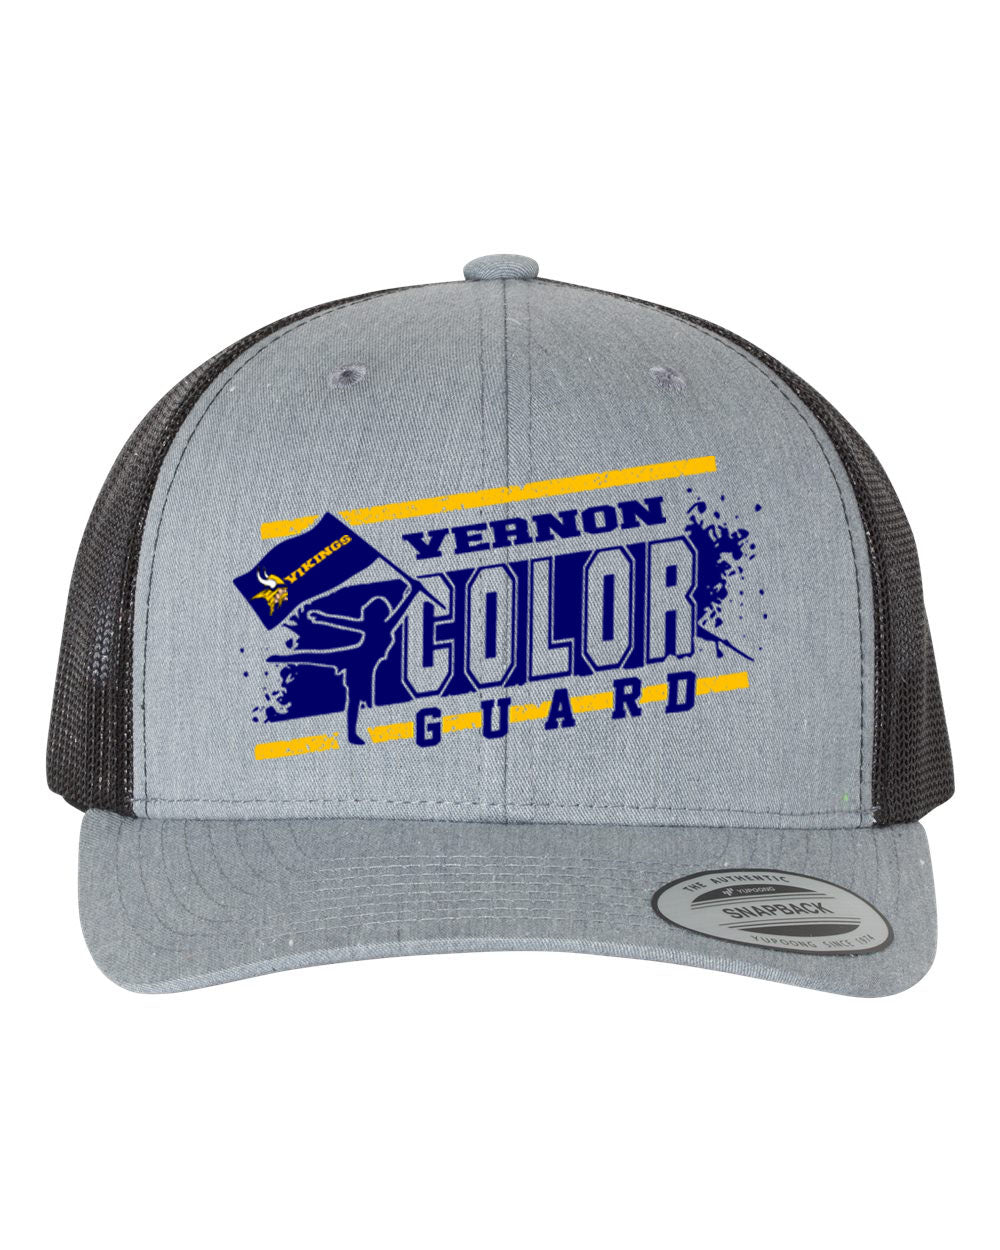 Vernon Marching Band Design 4 Trucker Hat